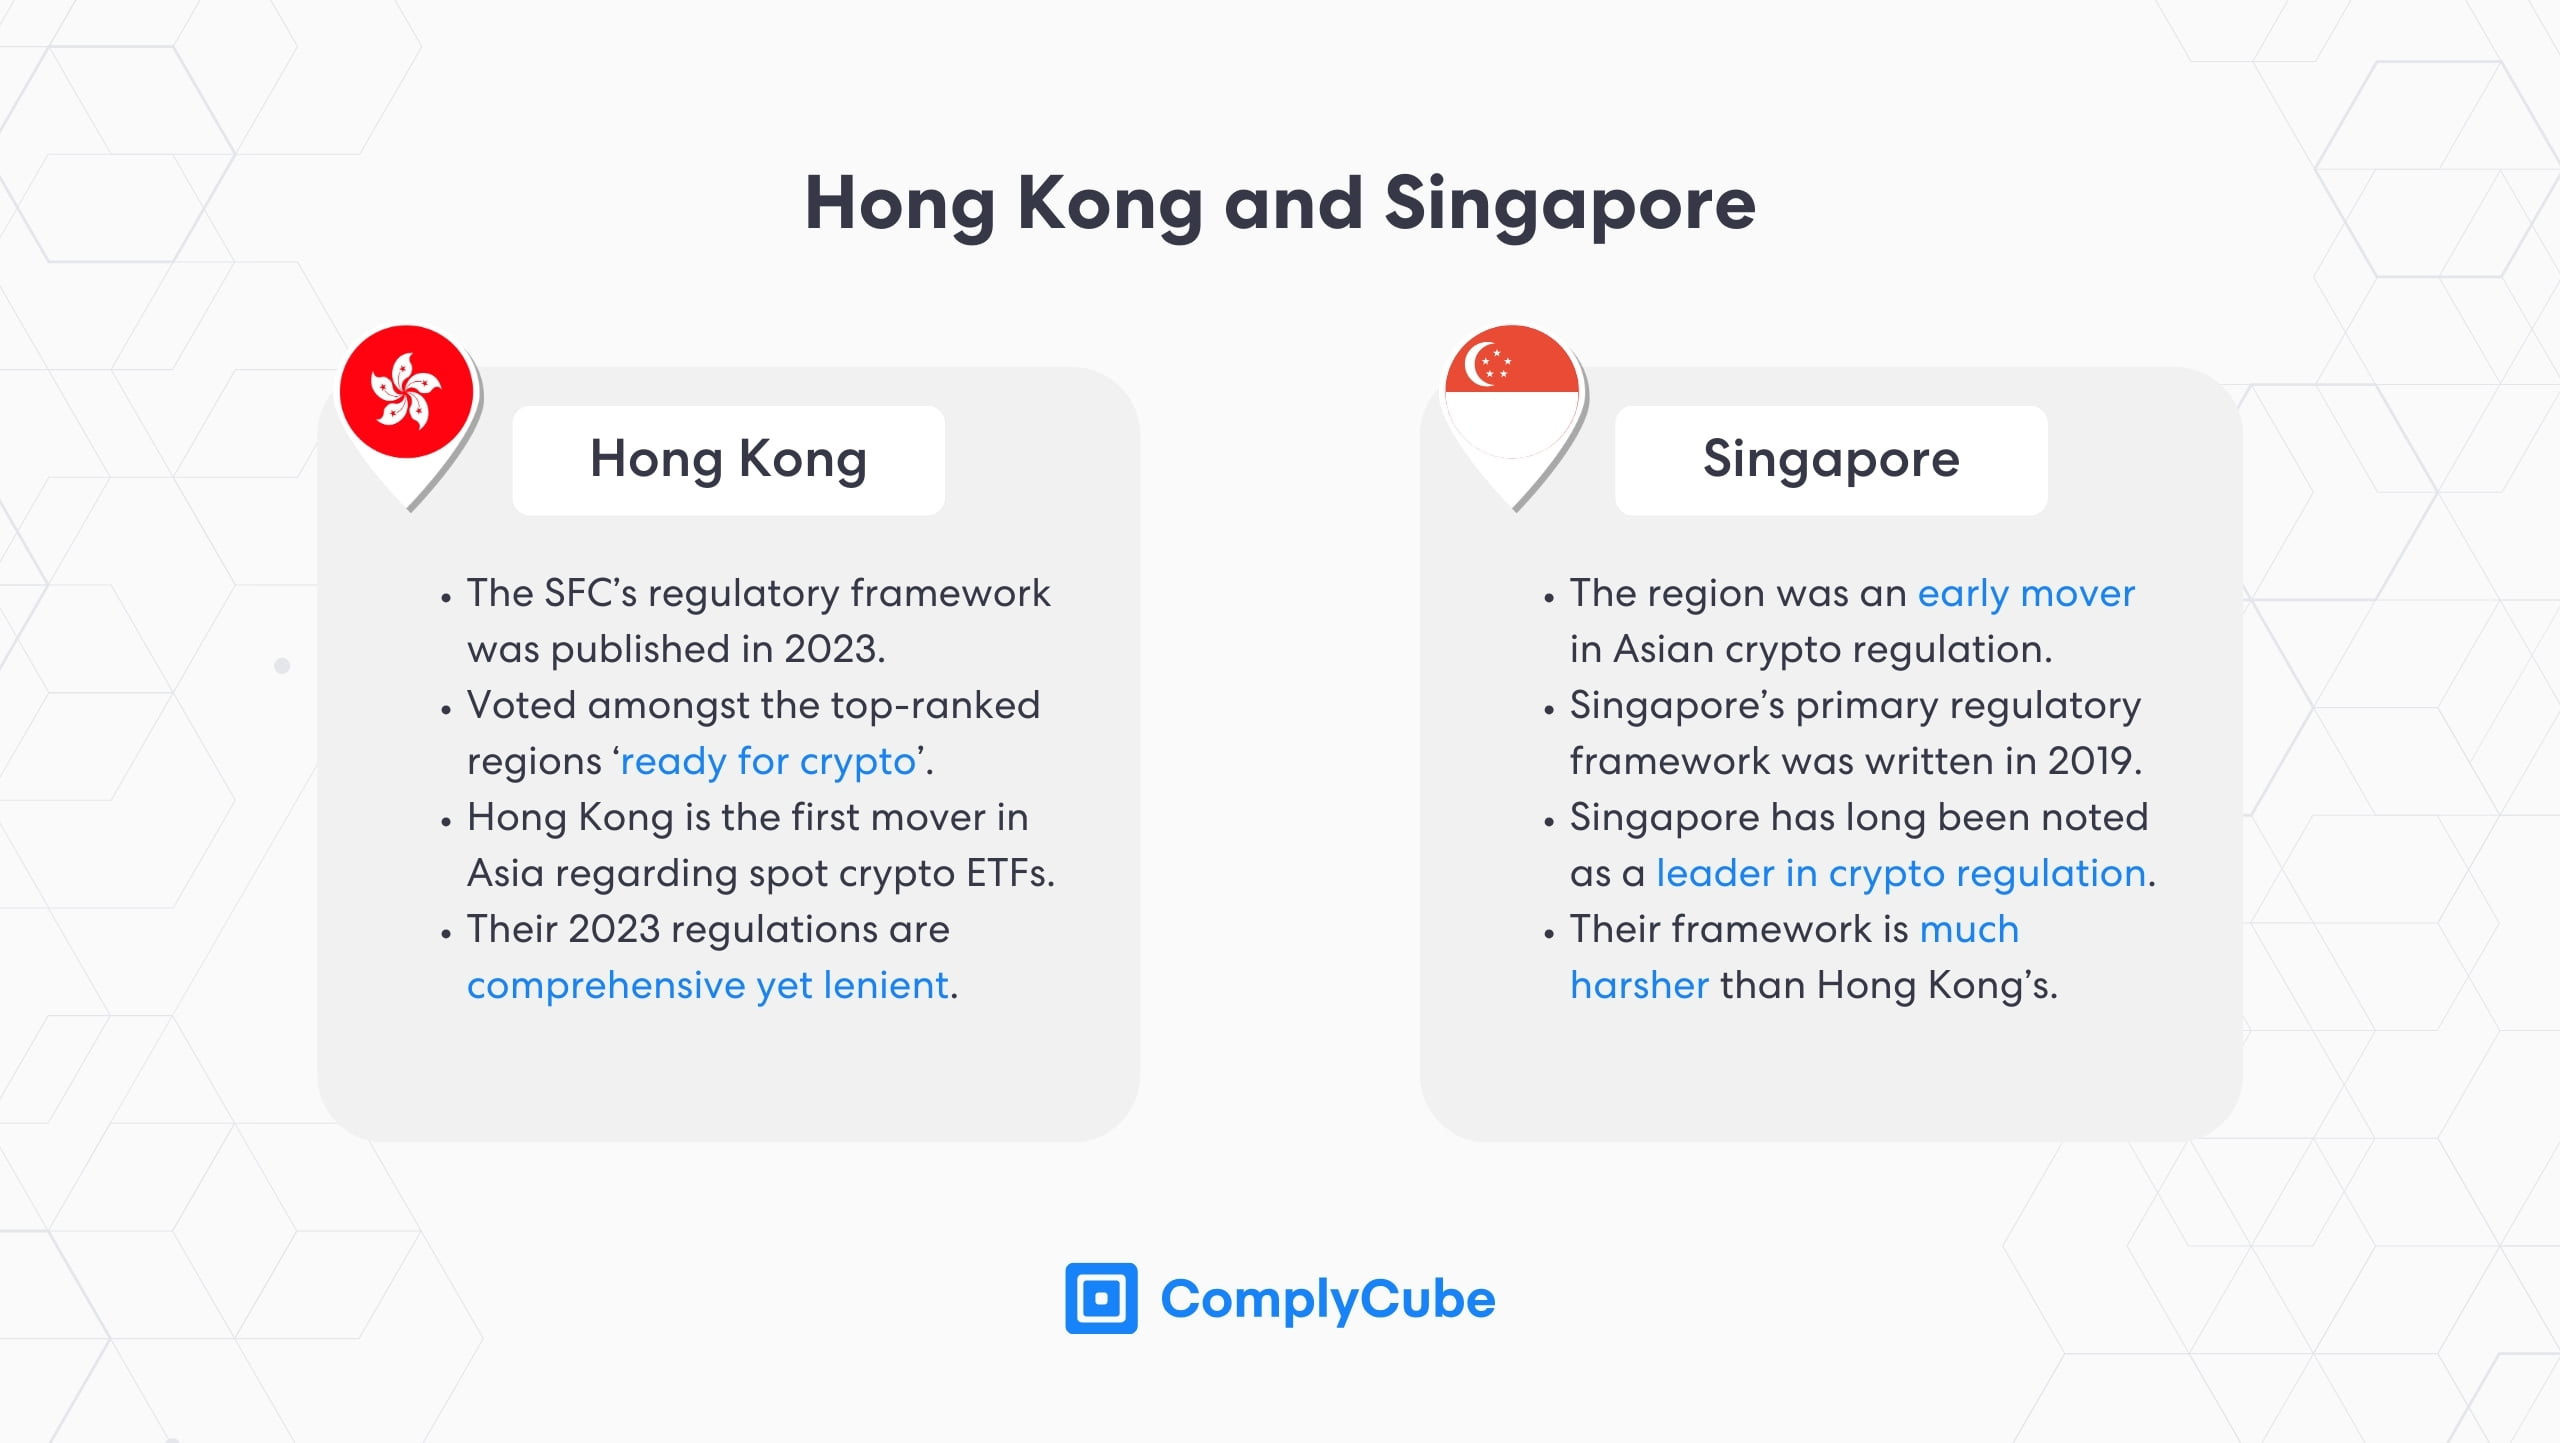 AML crypto regulations in Hong Kong and Singapore